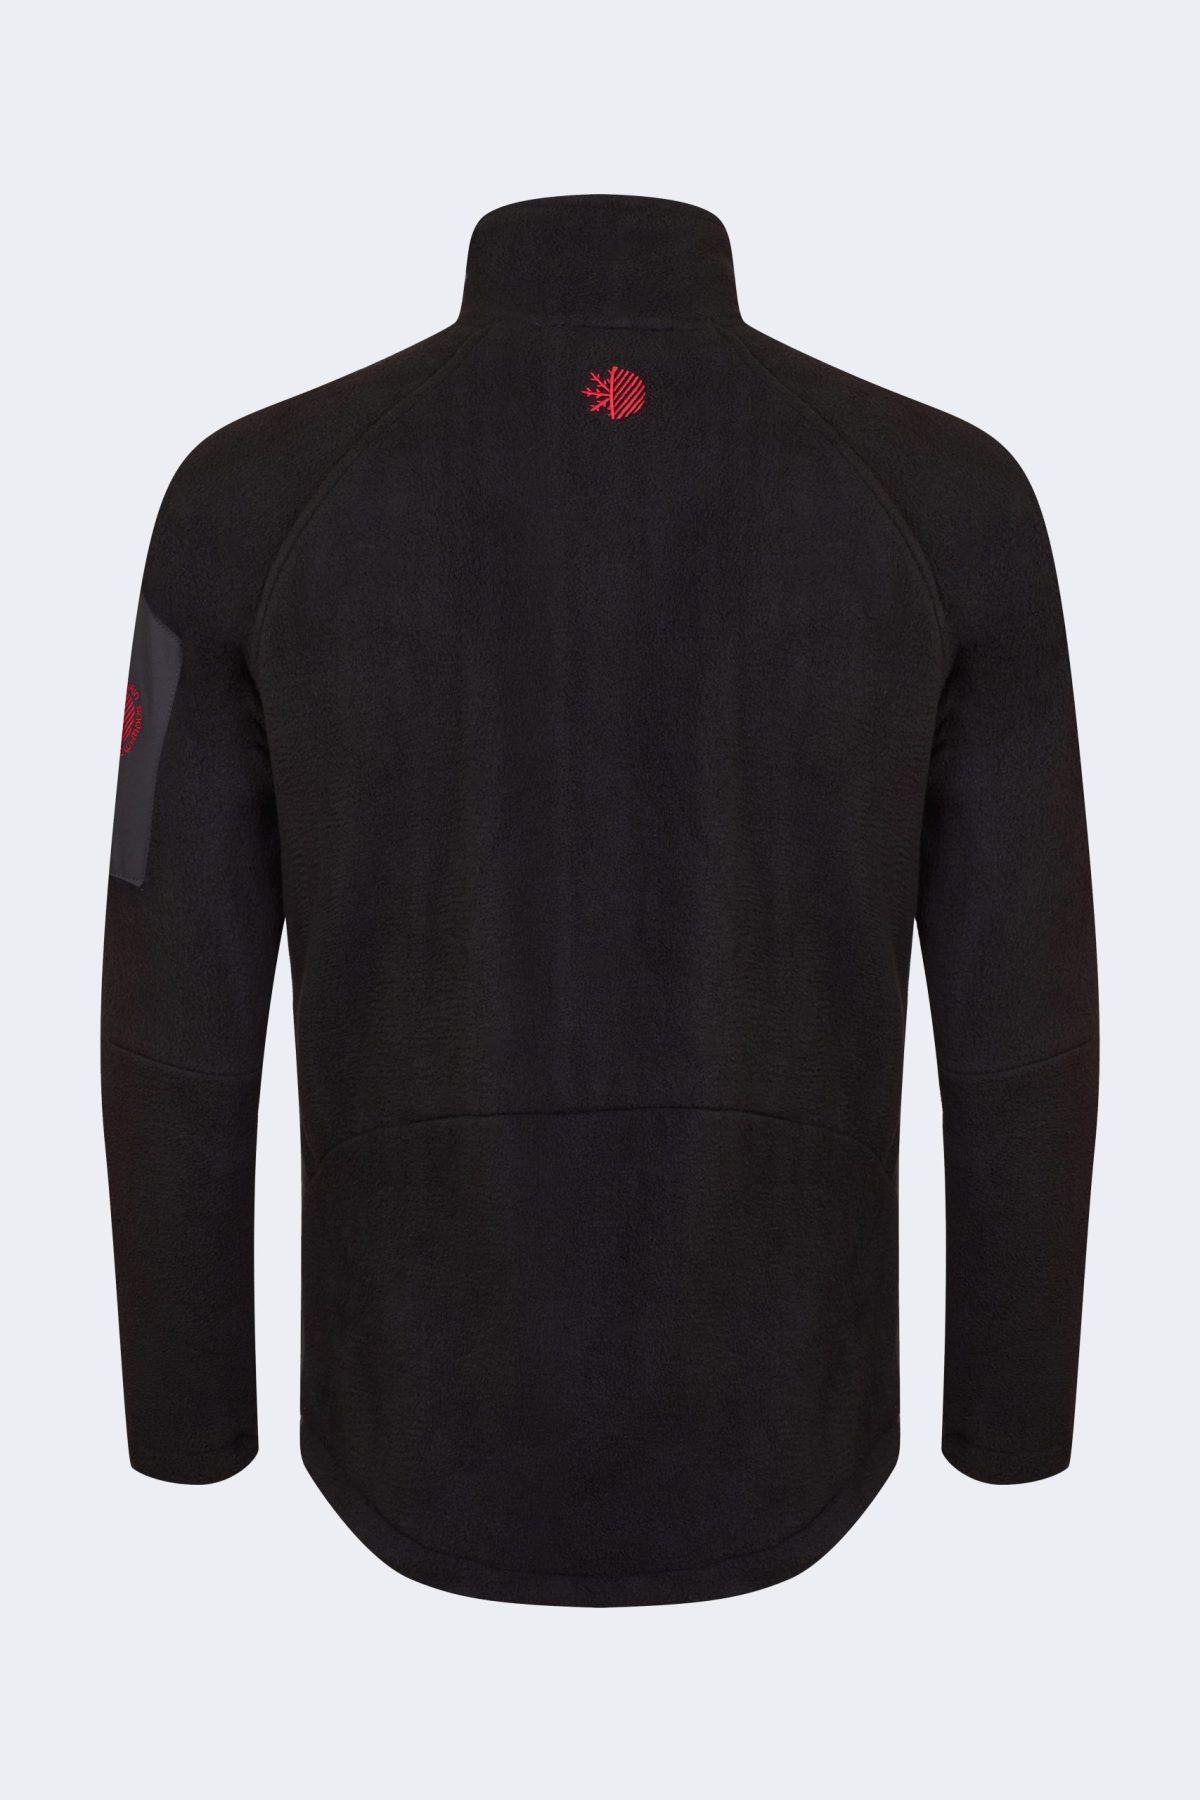 Rainsnow Men's cotton Jacket – Black-2058